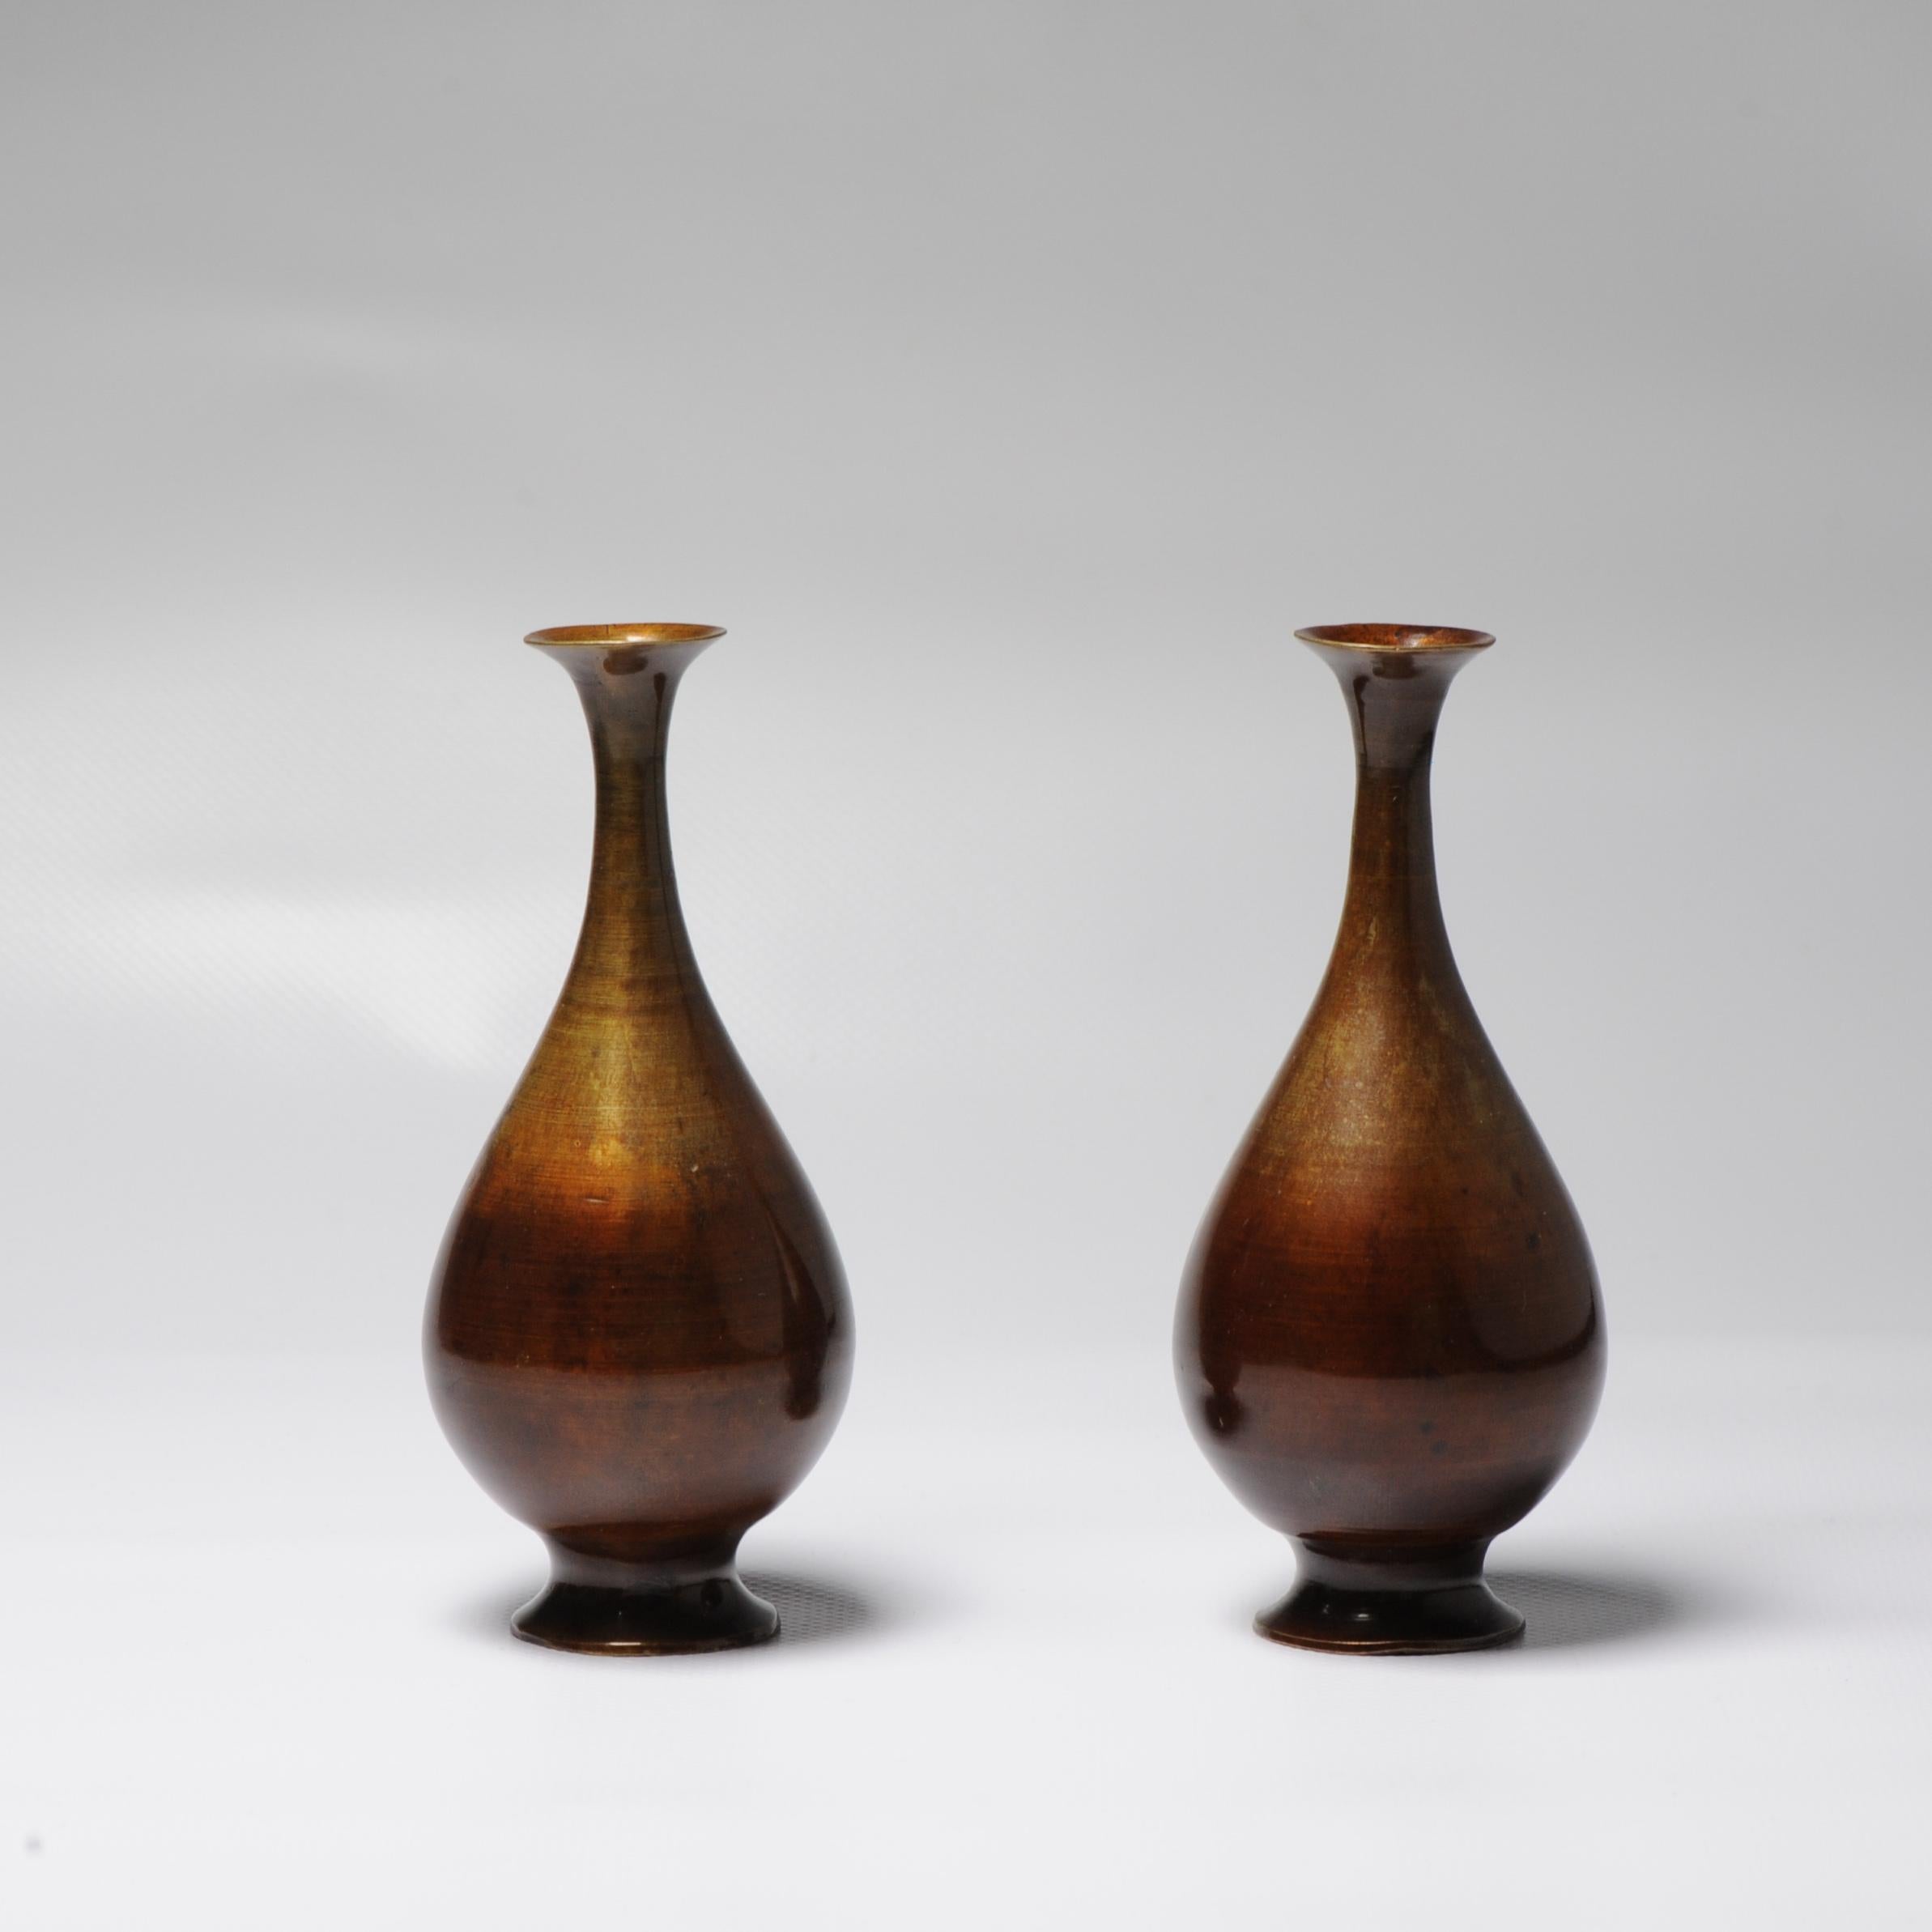 Antique Bronze Meiji Vase with Cranes 19th Century Japan, Japanese For Sale 1